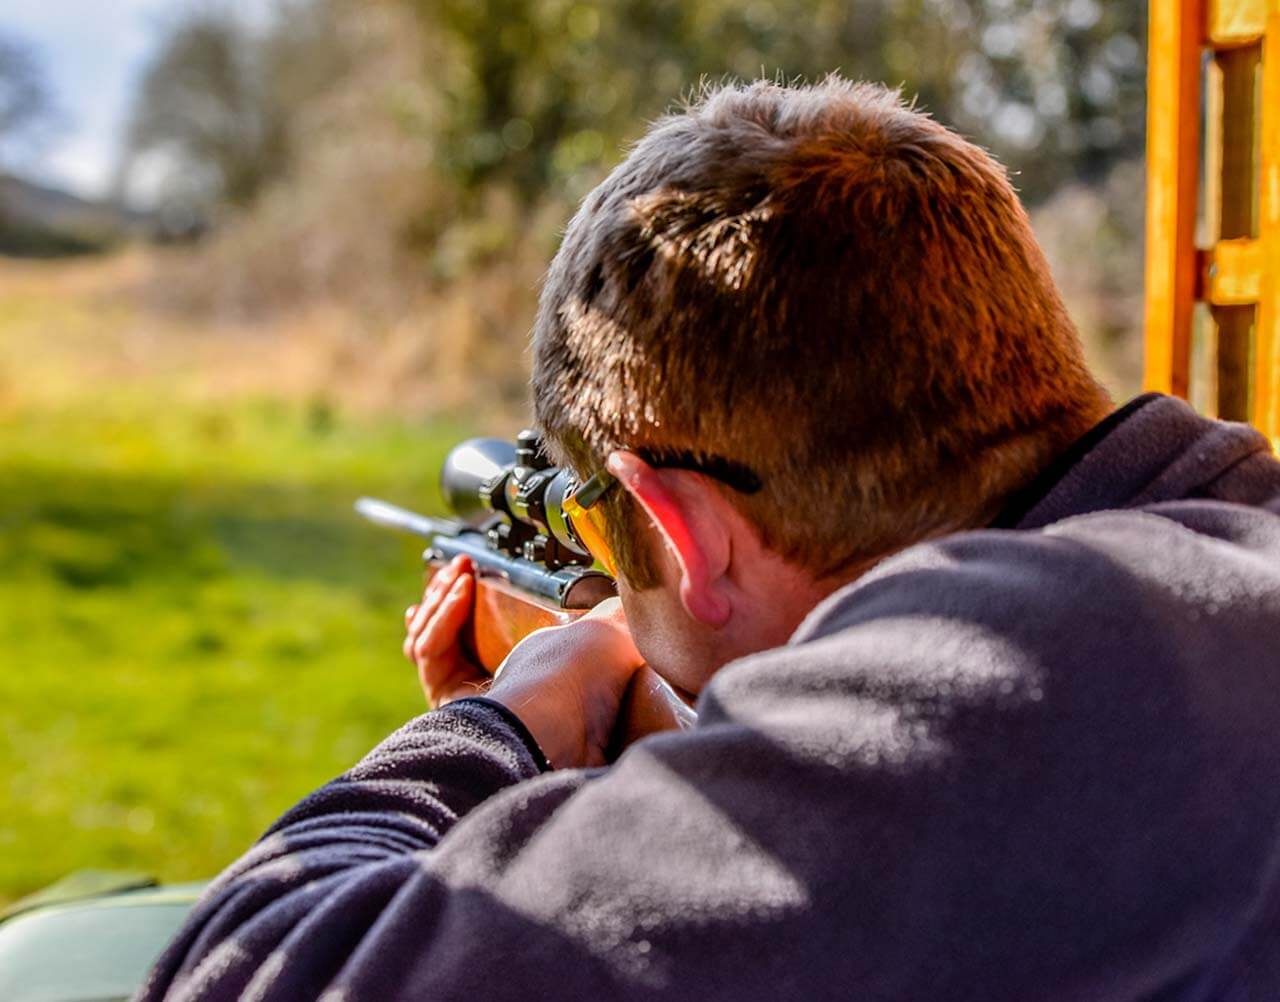 A man aiming down a range with a rifle